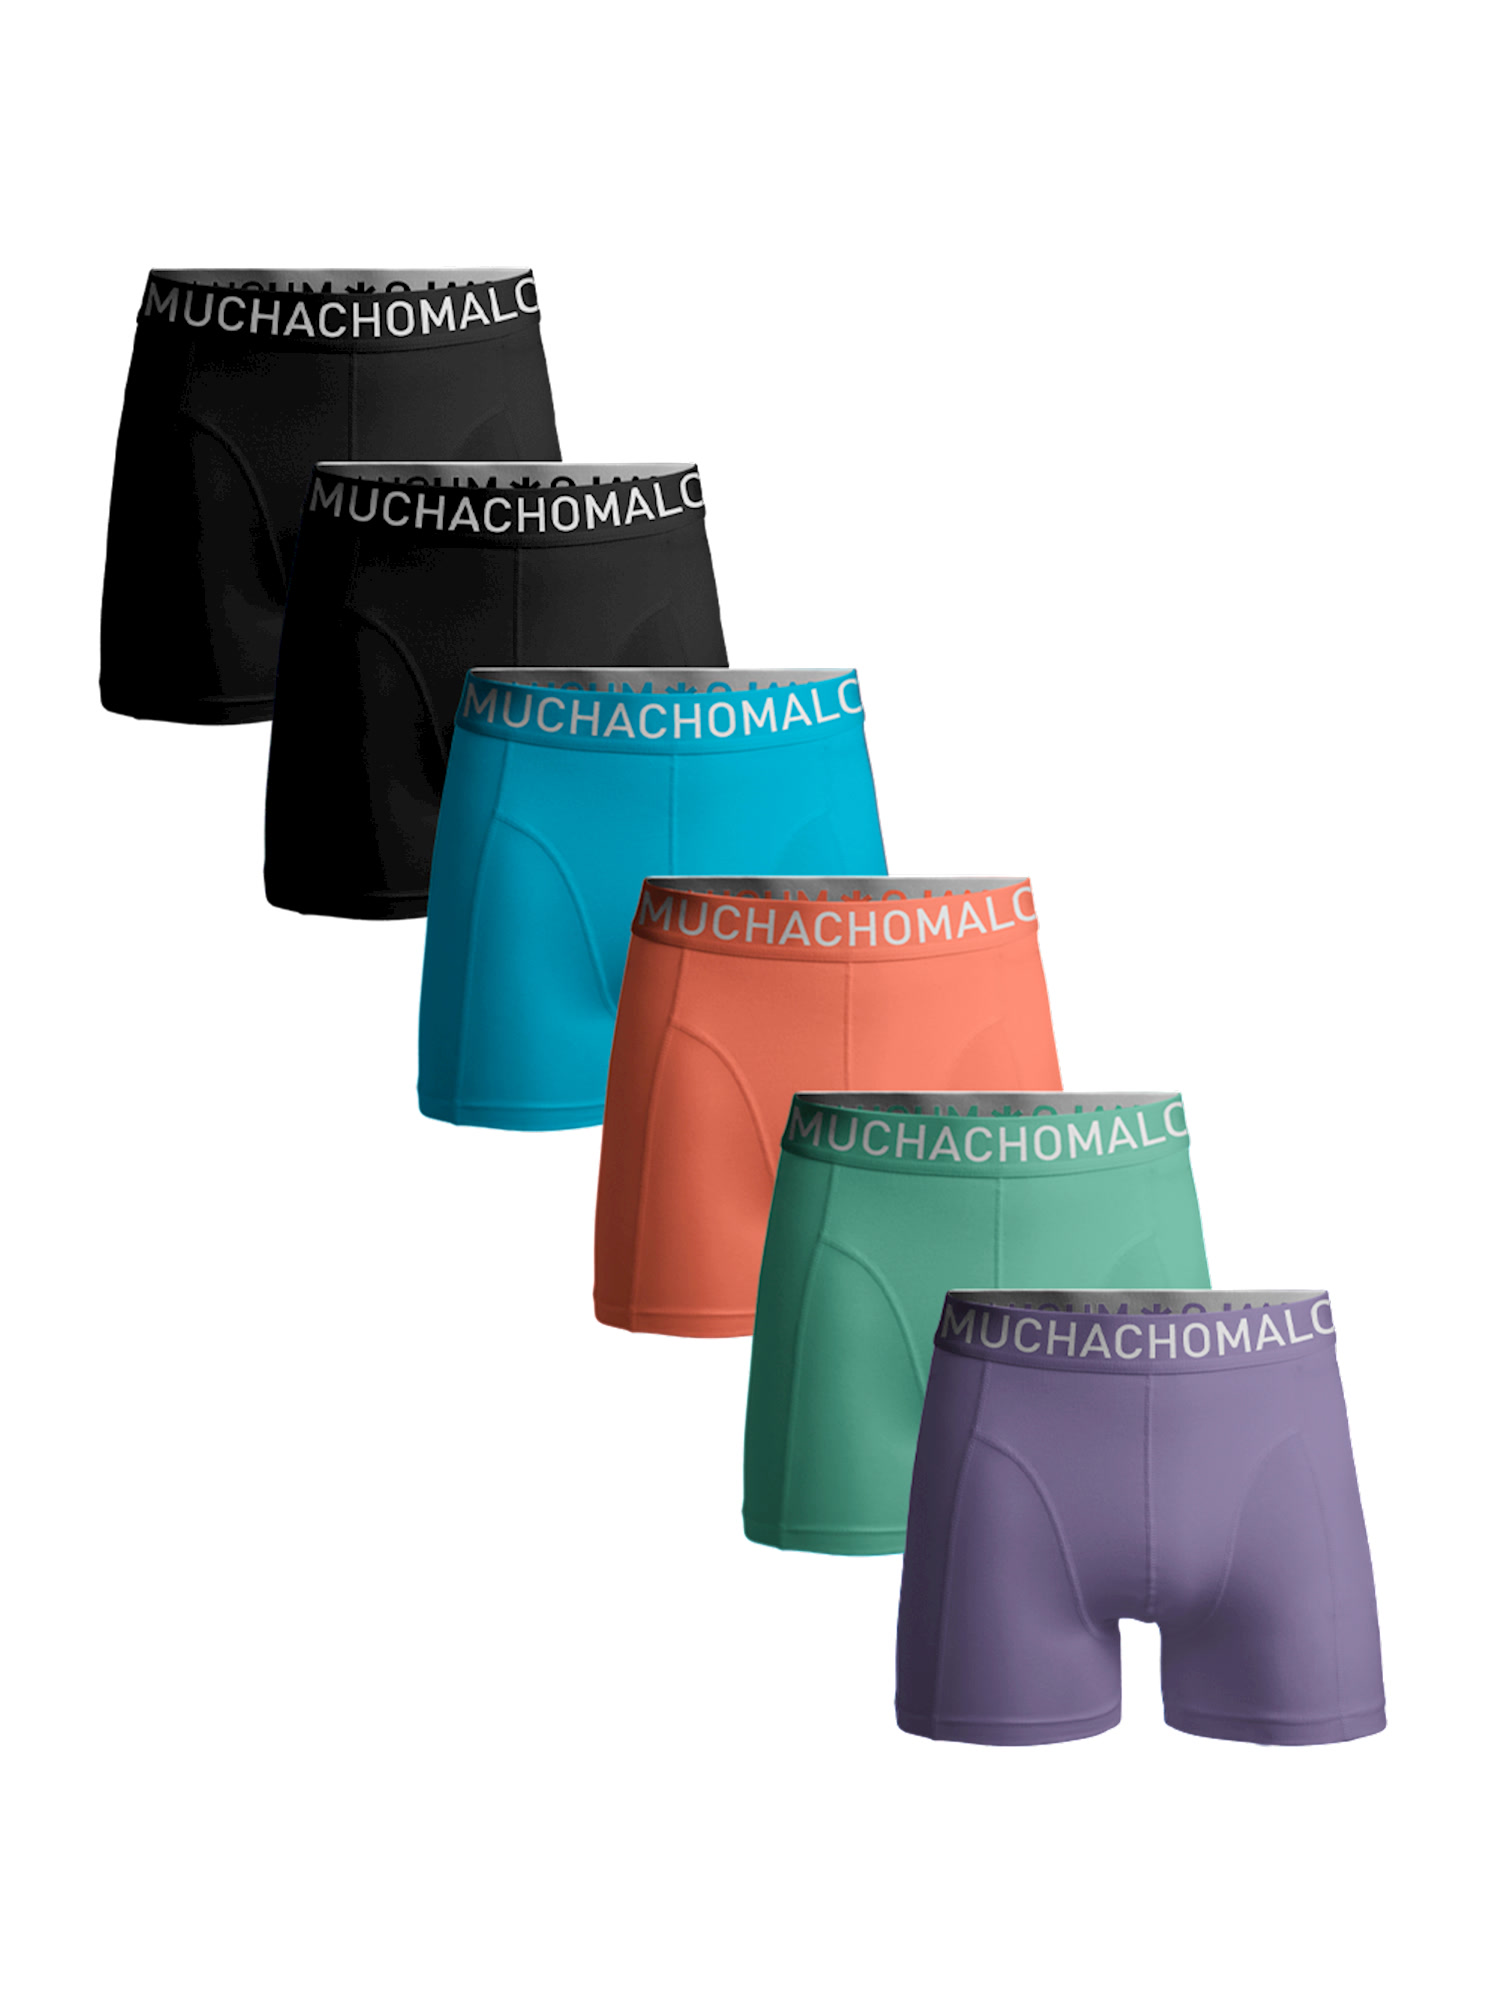 Боксеры Muchachomalo 6er-Set: Boxershorts, цвет Black/Black/Blue/Pink/Green/Purple боксеры muchachomalo 5er set boxershorts цвет black blue blue green pink